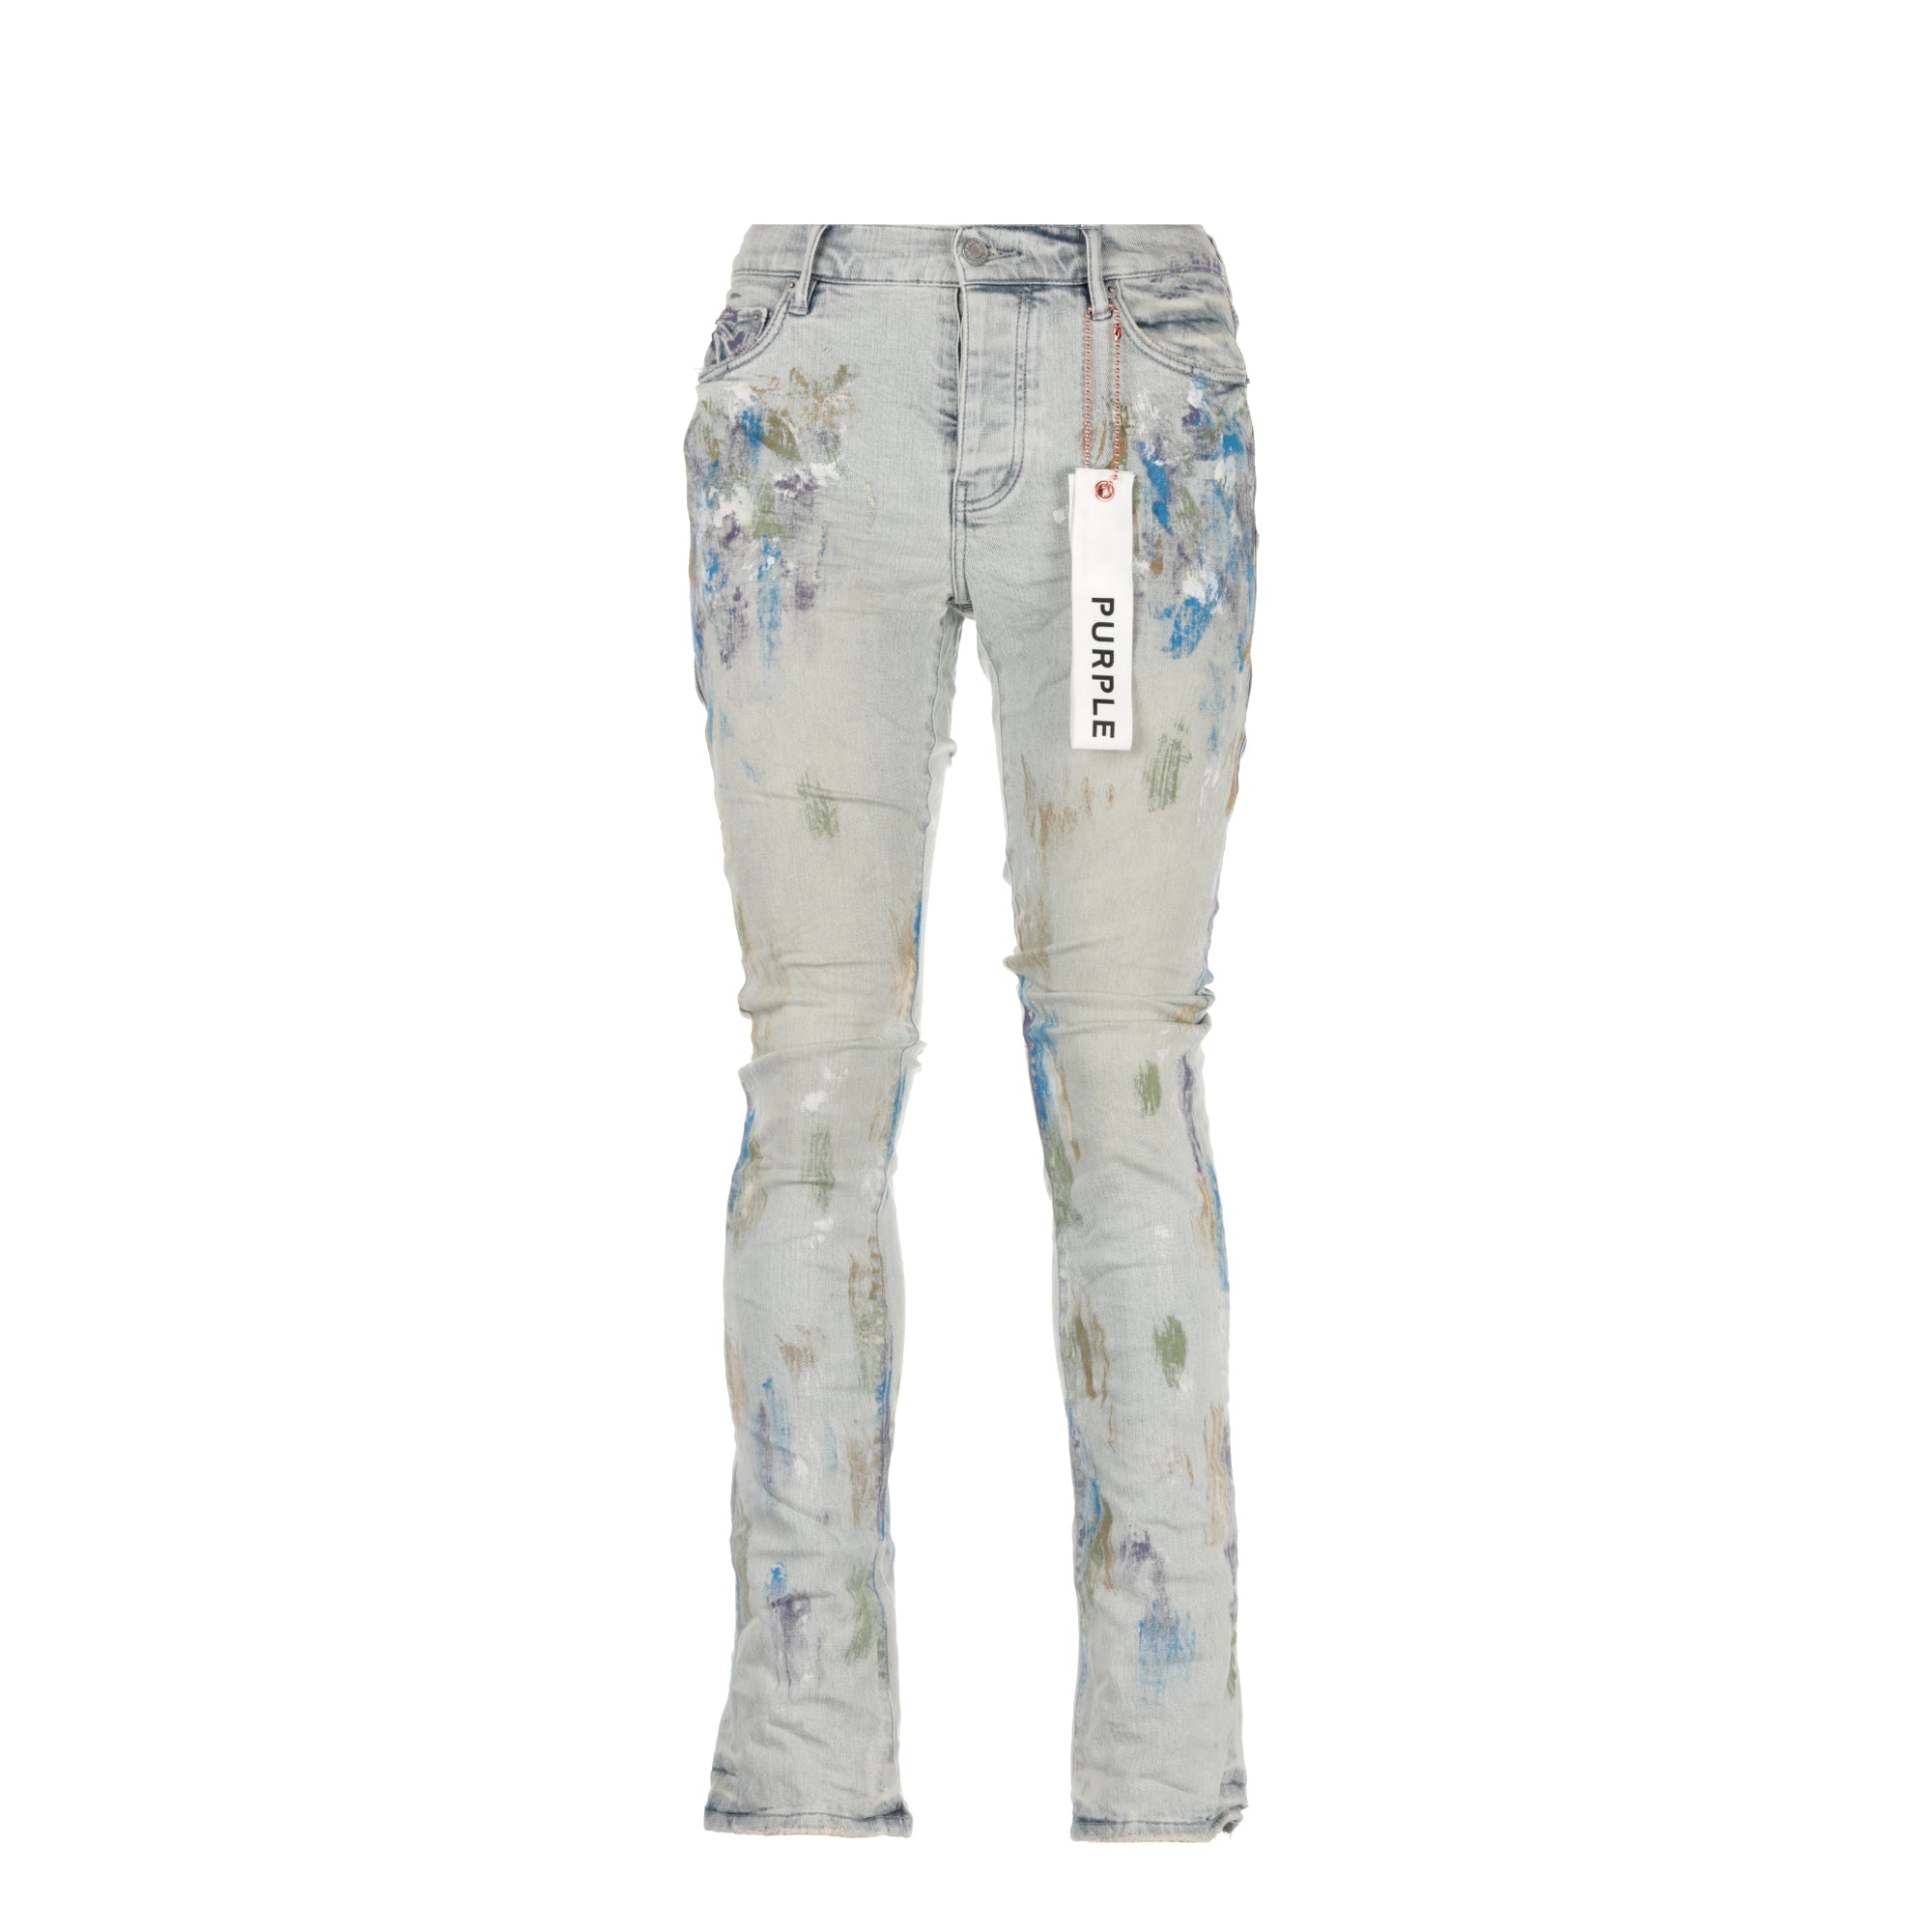 Purple Brand Jeans Mens Low Rise Slim Bootcut P004 White $320 Size 34/34